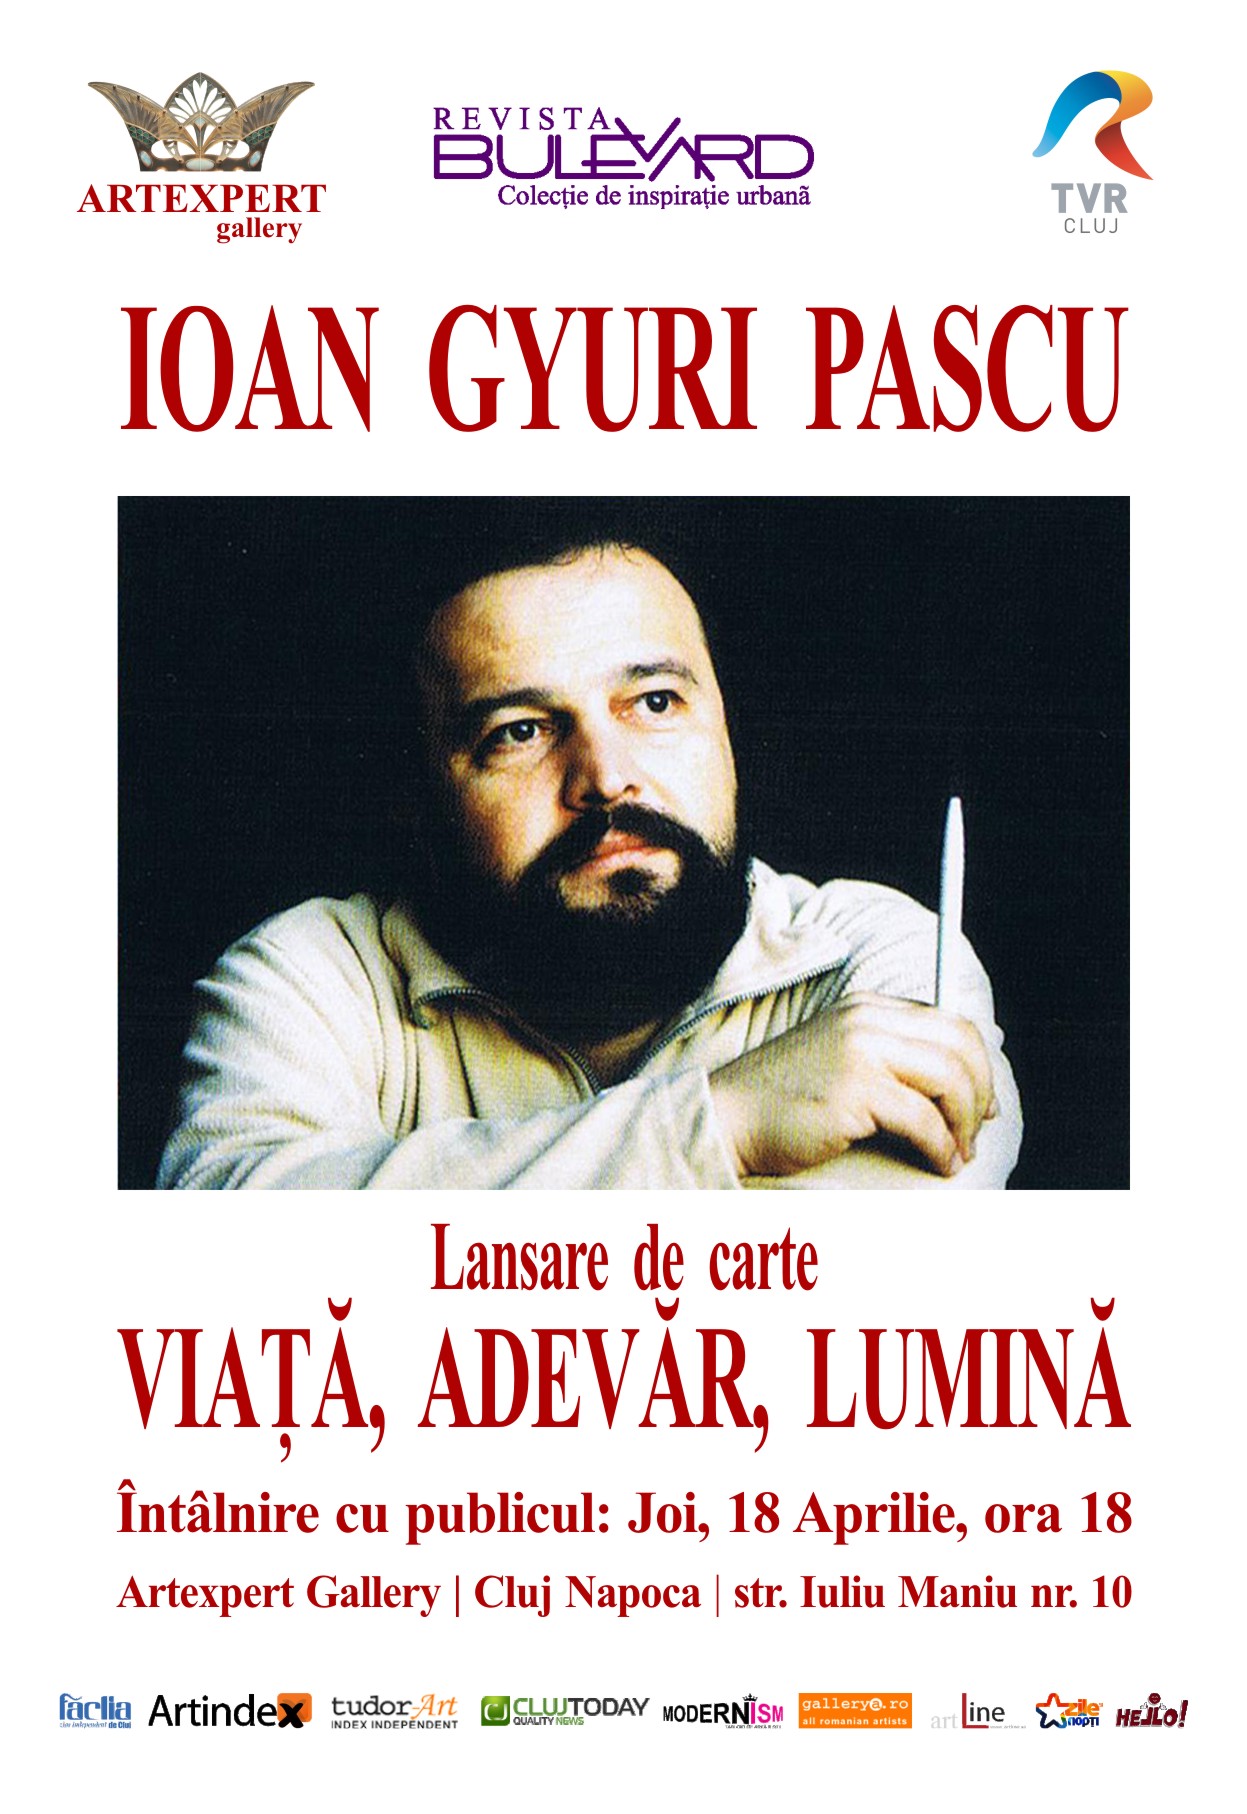 Unparalleled resource throw dust in eyes Ioan Gyuri Pascu îşi lanseză cartea la Cluj - Revista Bulevard